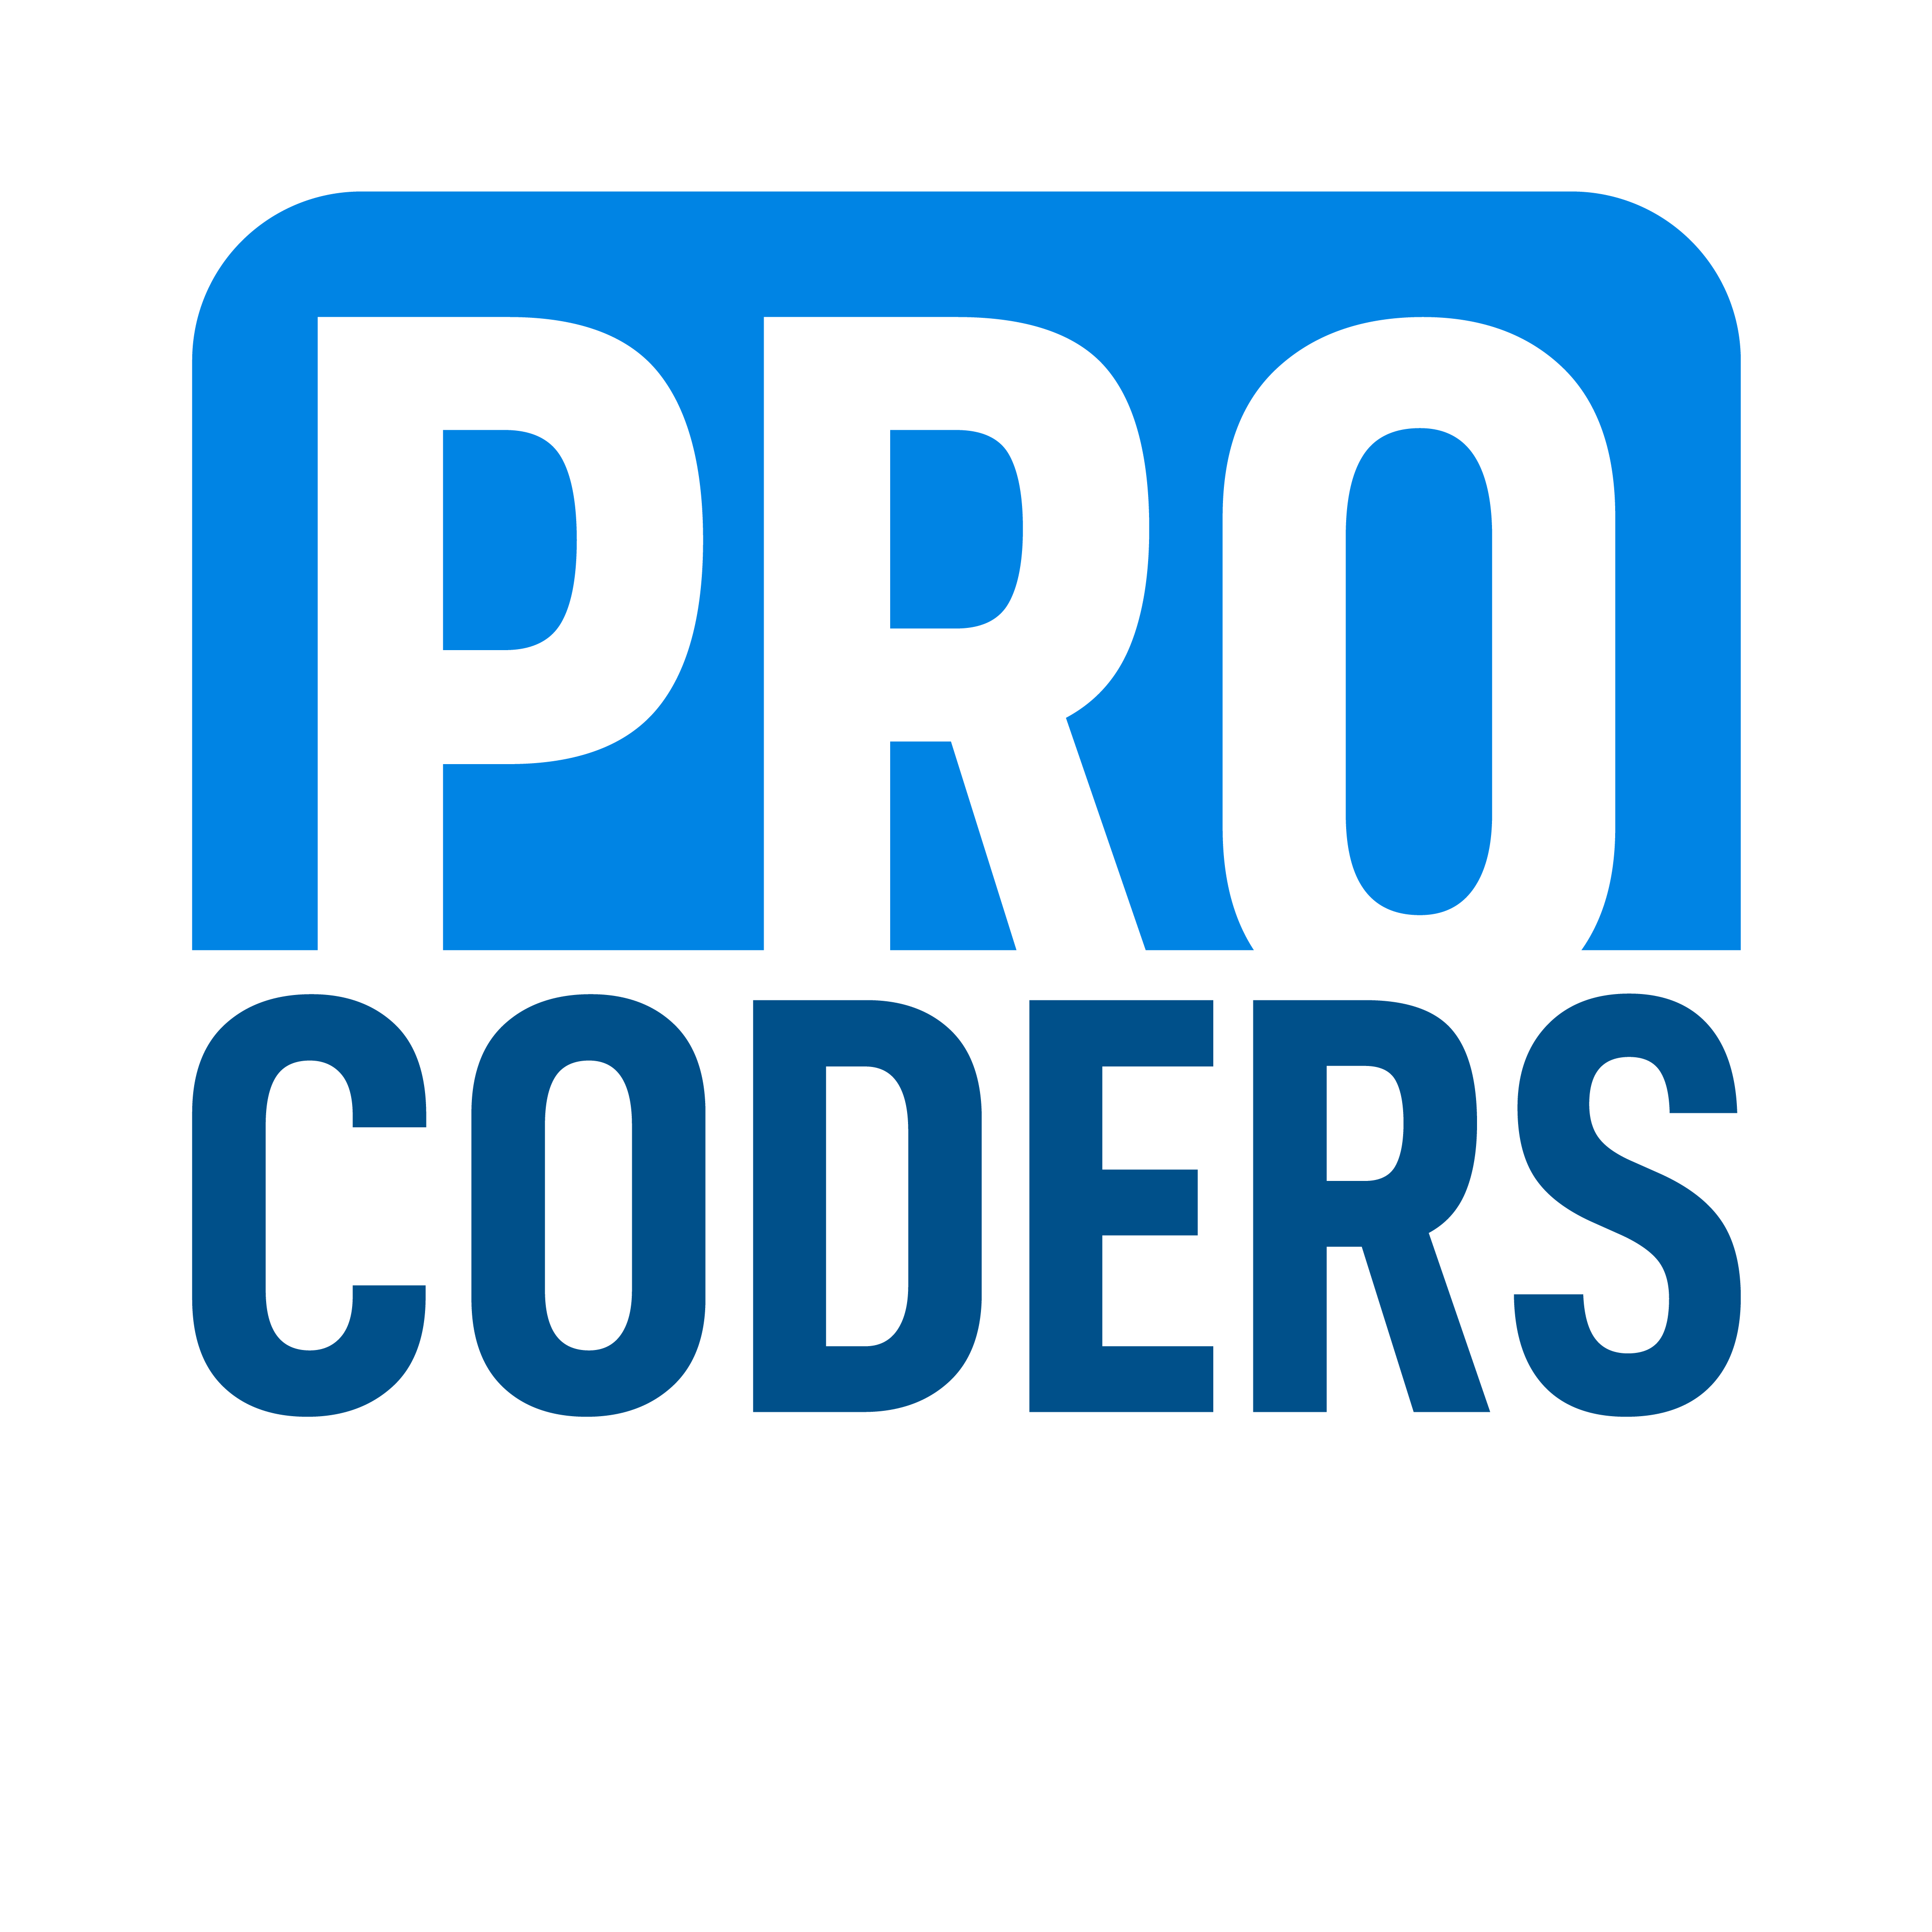 Pro Coders